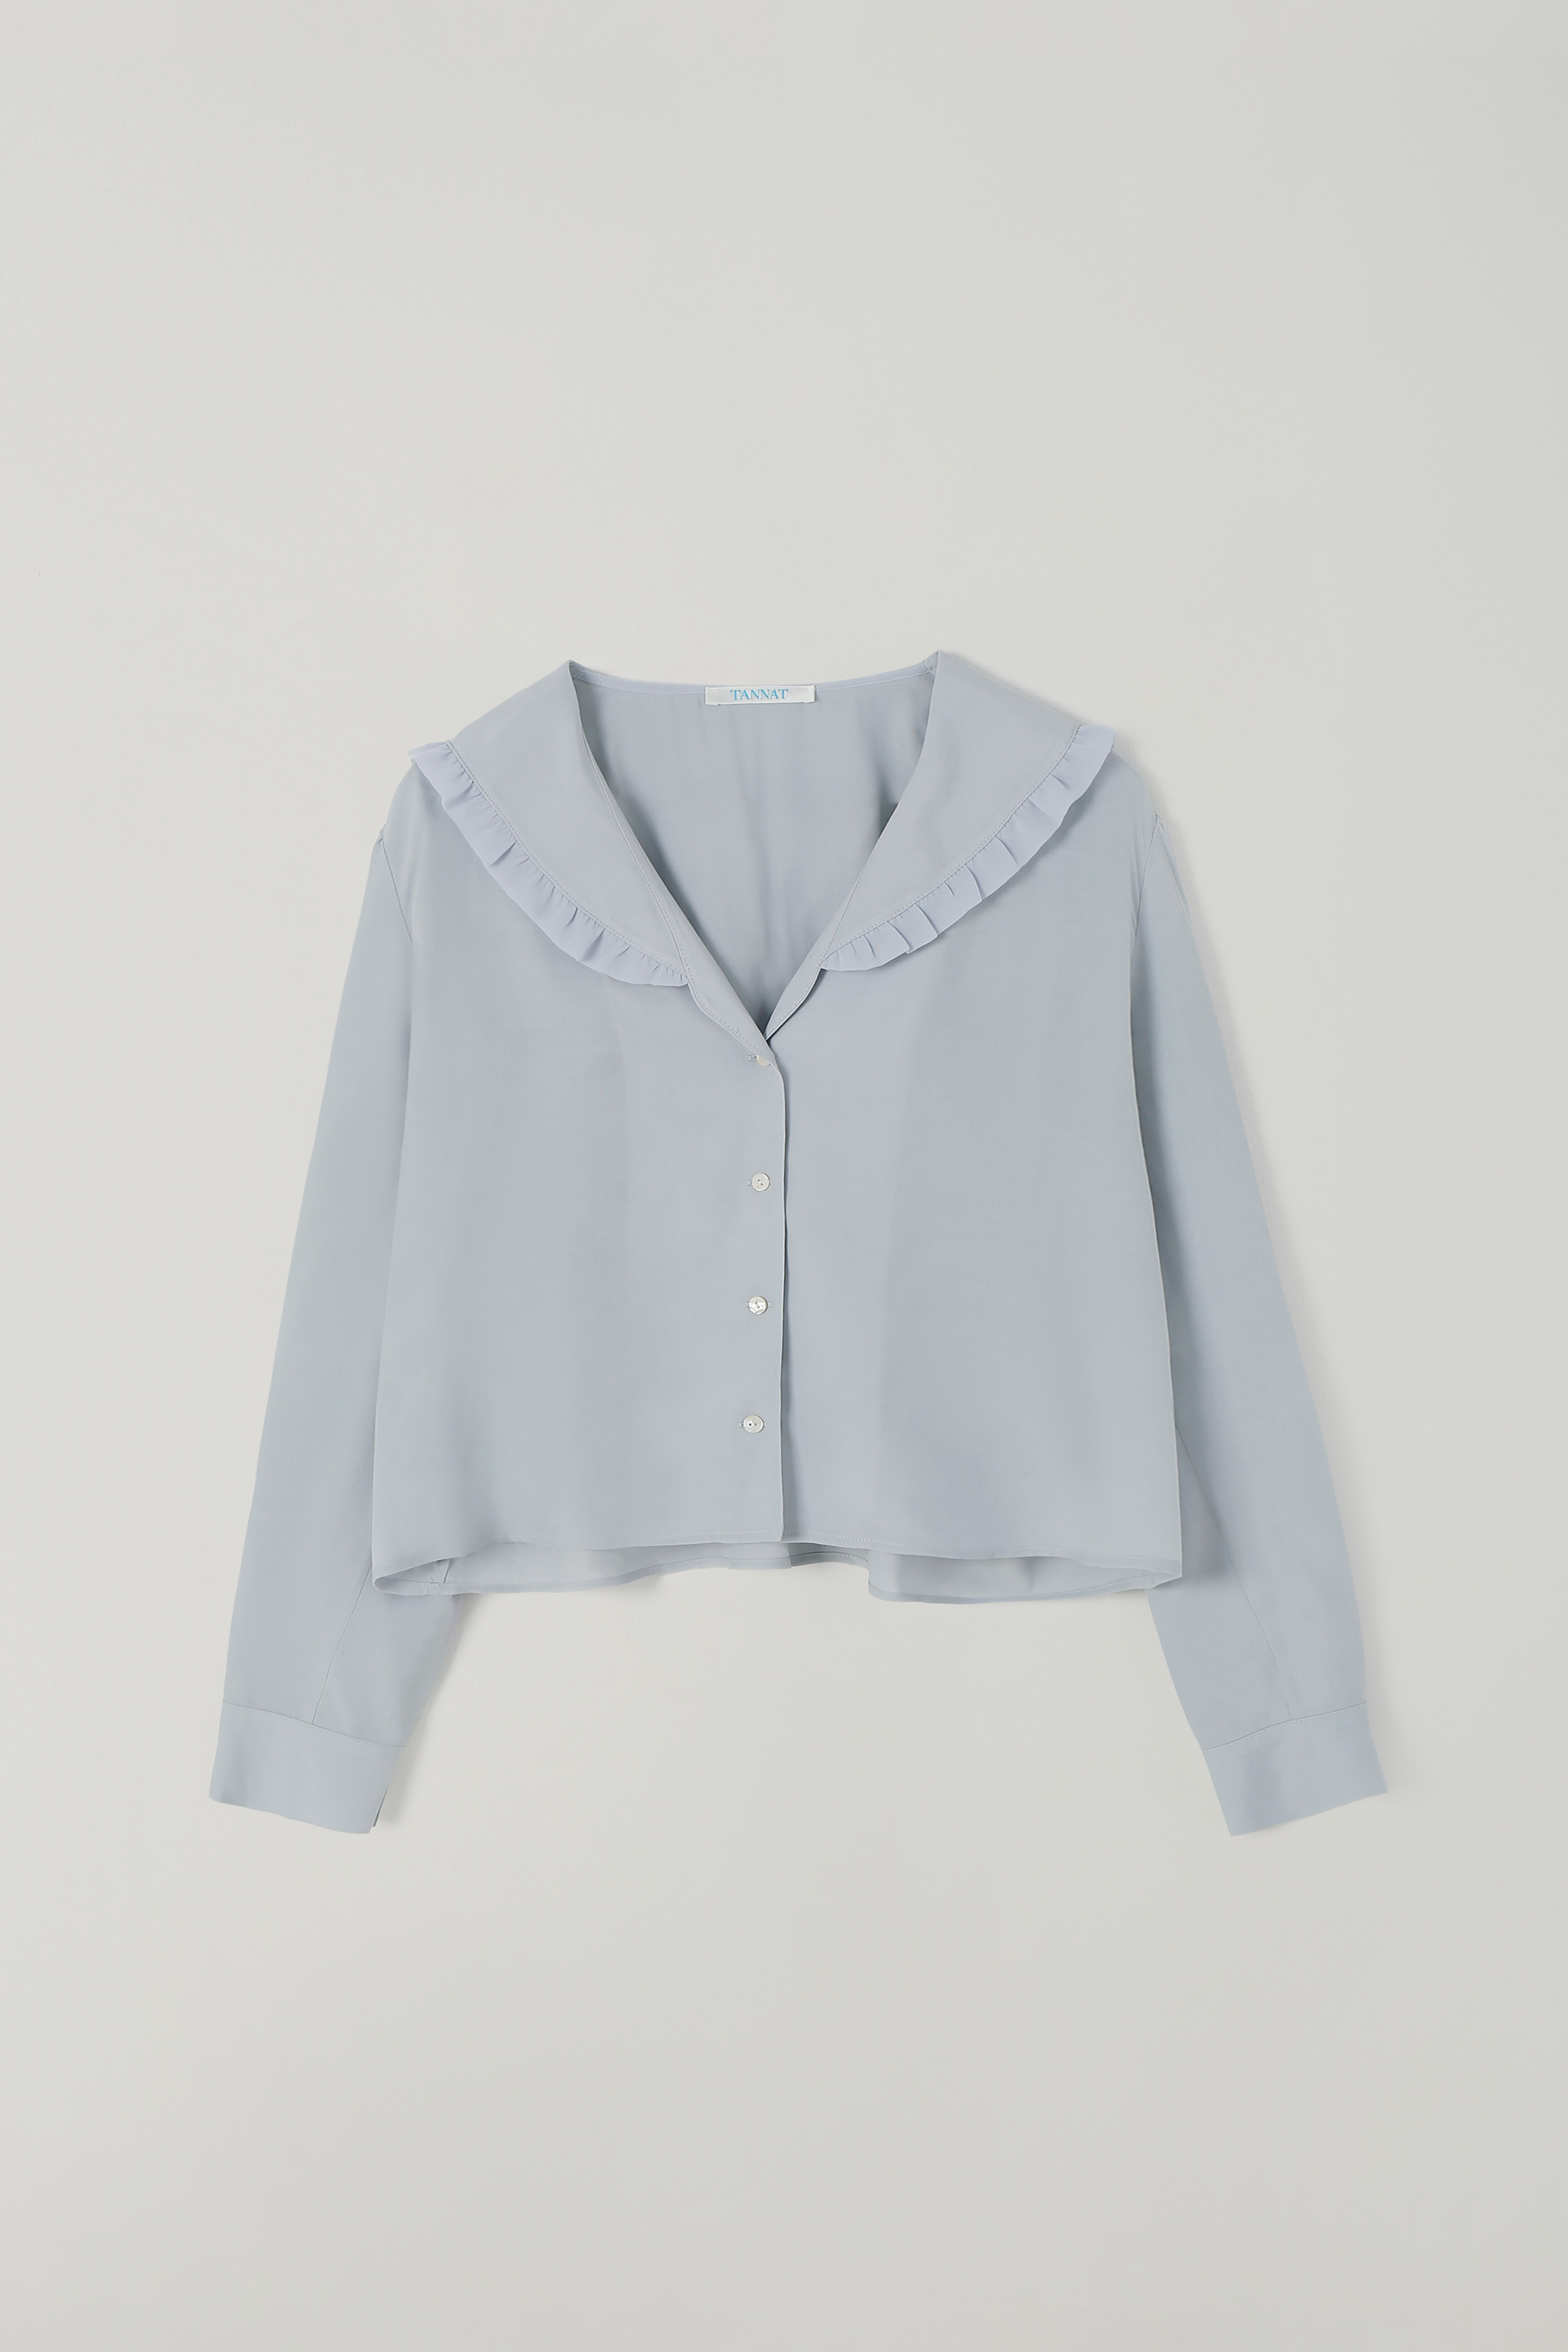 T/T Soft frill blouse (powder blue)